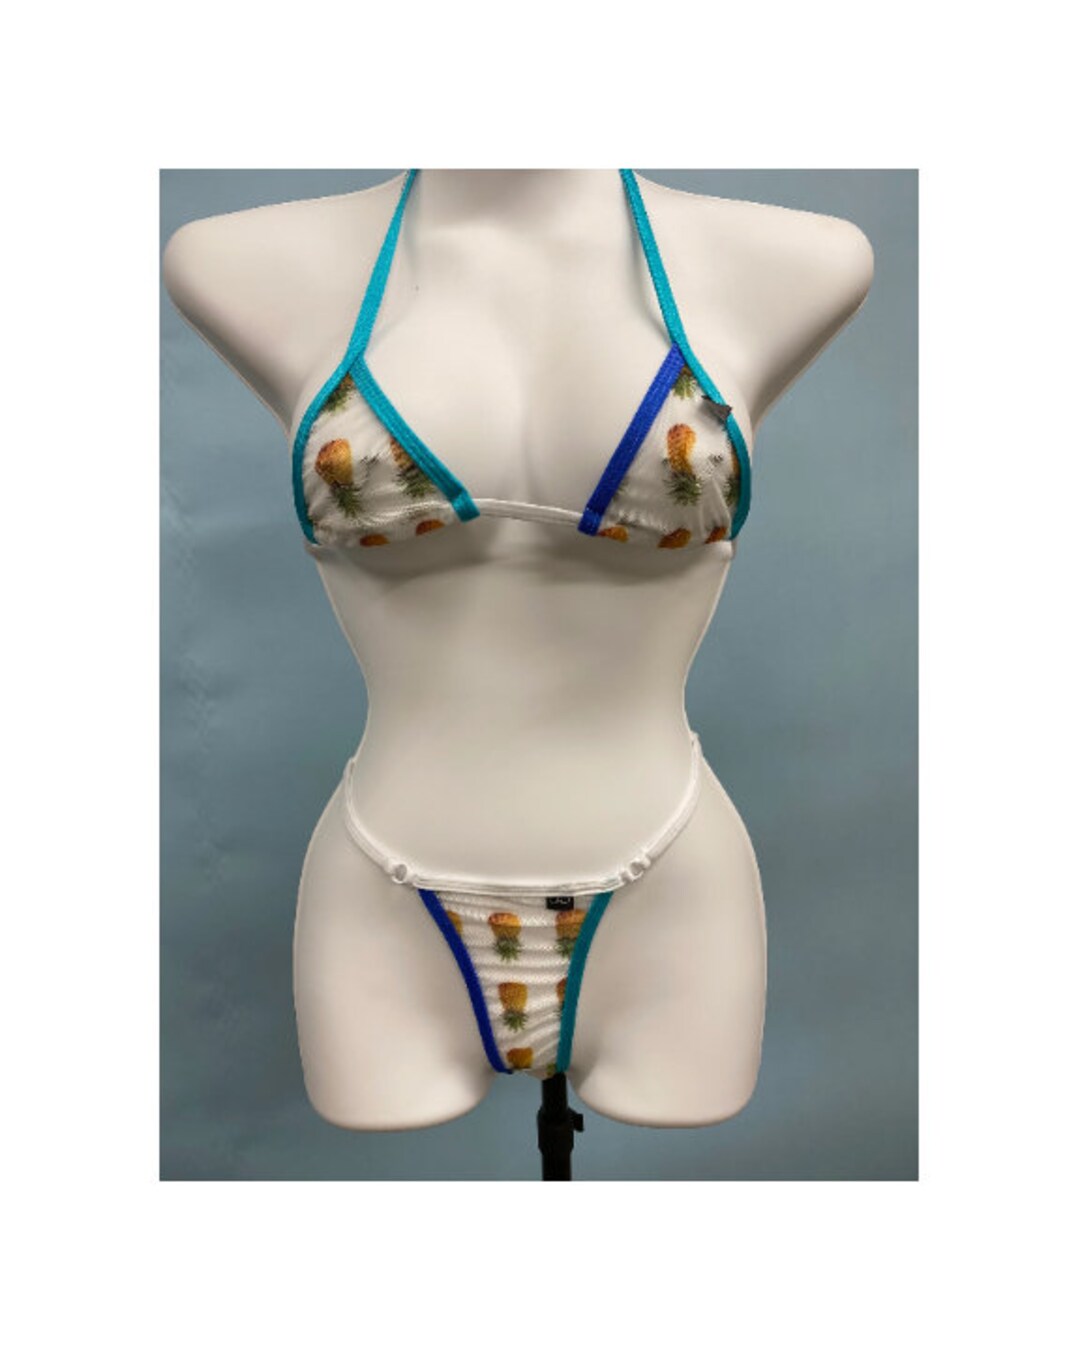 Mesh Swinger Bikini Customize Your Desires Upside Down image picture